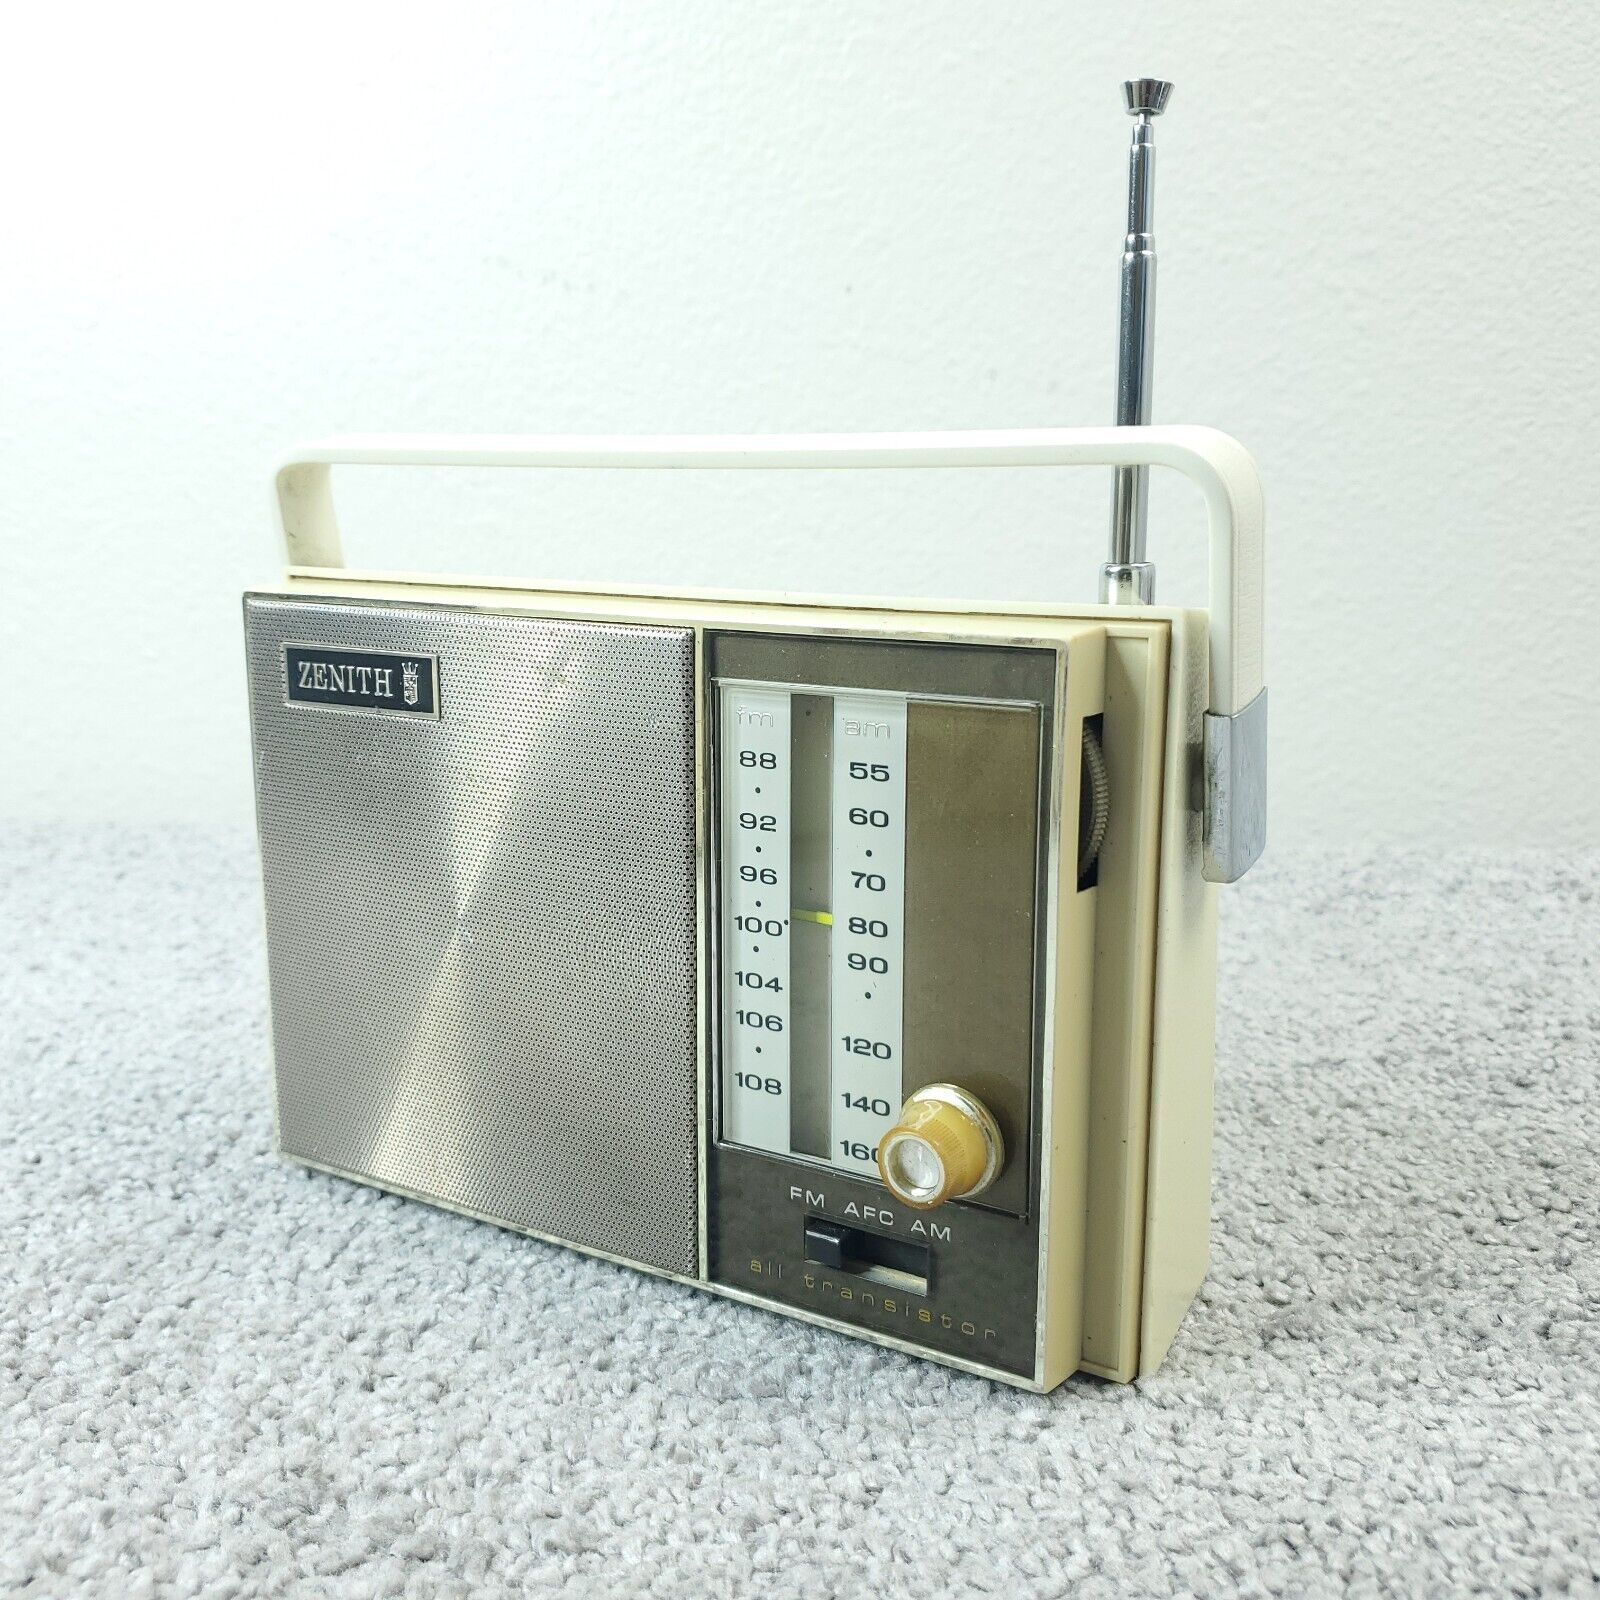 Zenith Royal Transistor Radio AM/FM 1960's Portable Vintage White Tested Works